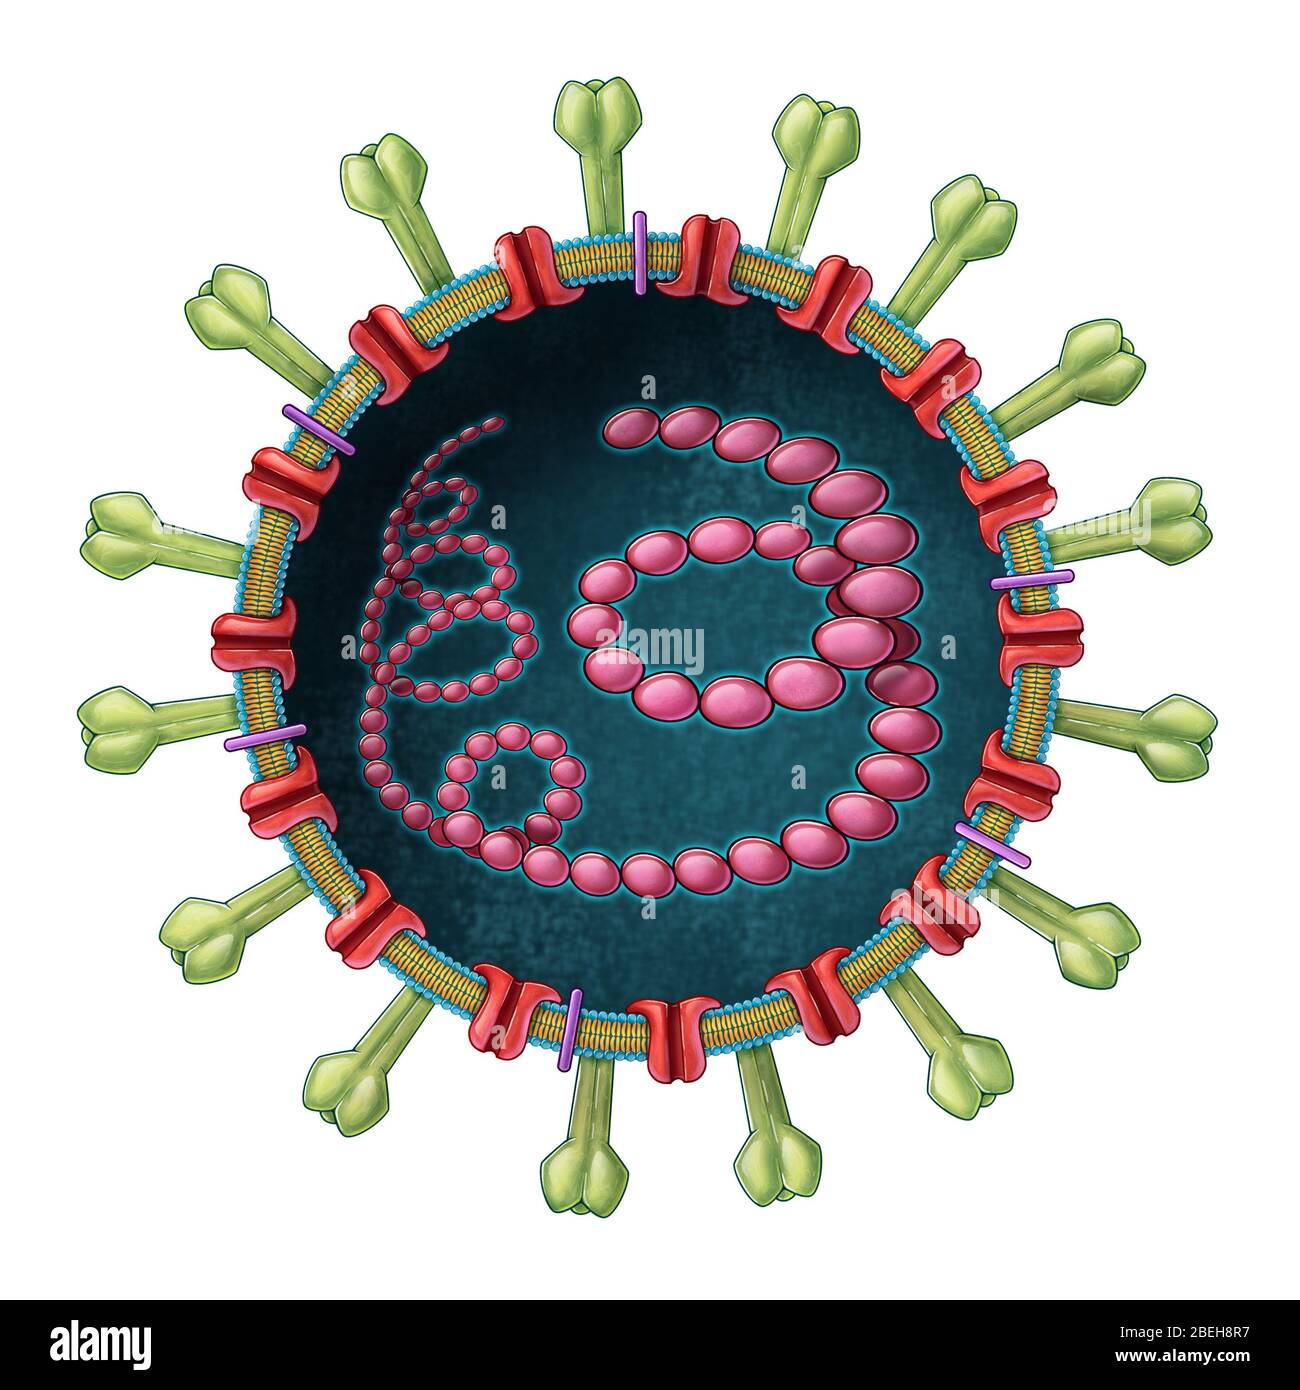 MERS Coronavirus, Illustration Banque D'Images